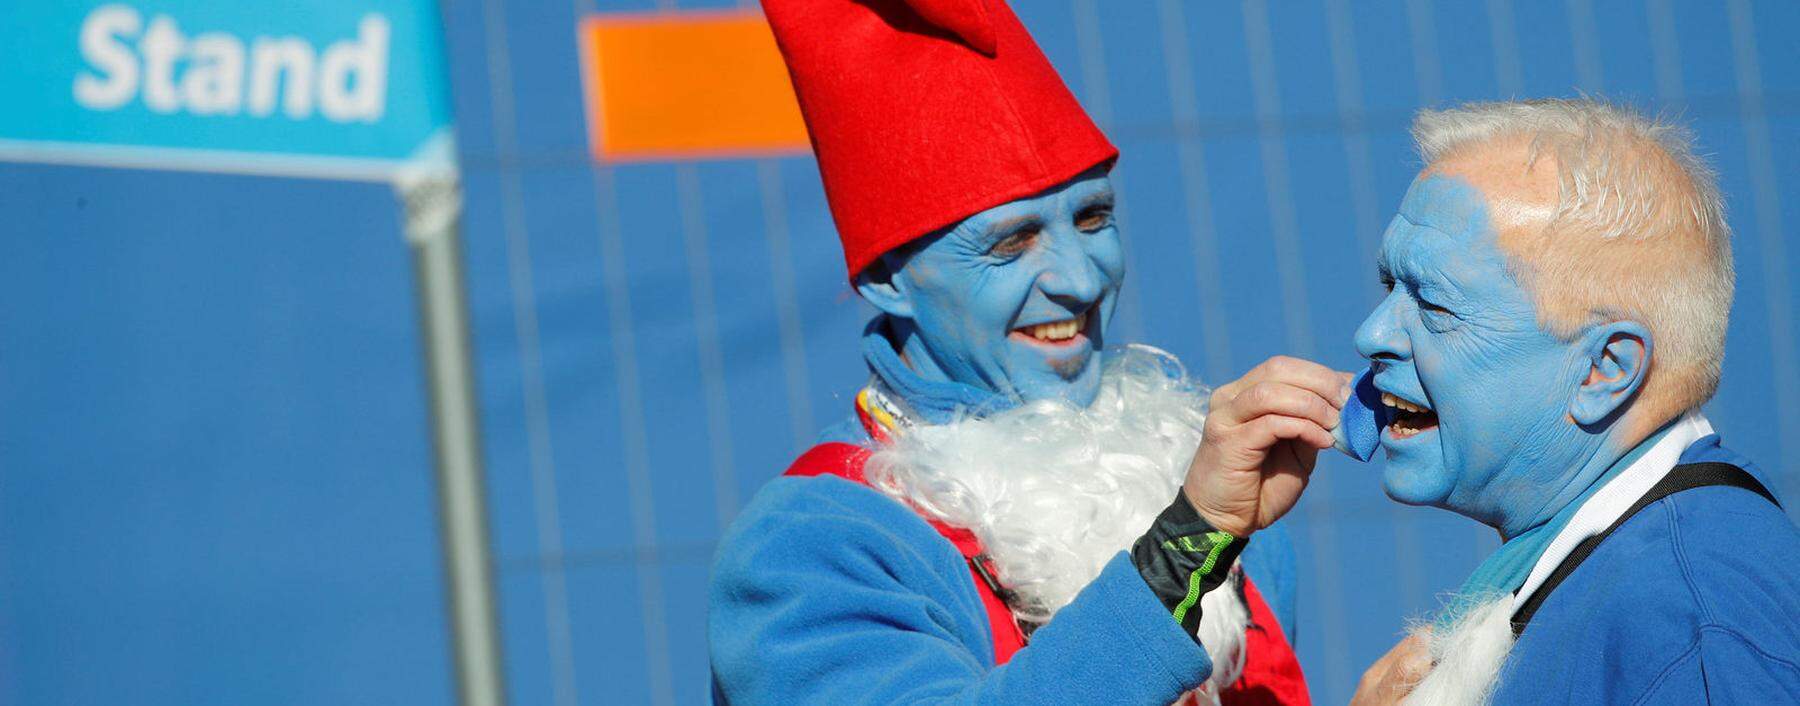 A participant dressed as a smurf paints a man's face blue in Lauchringen